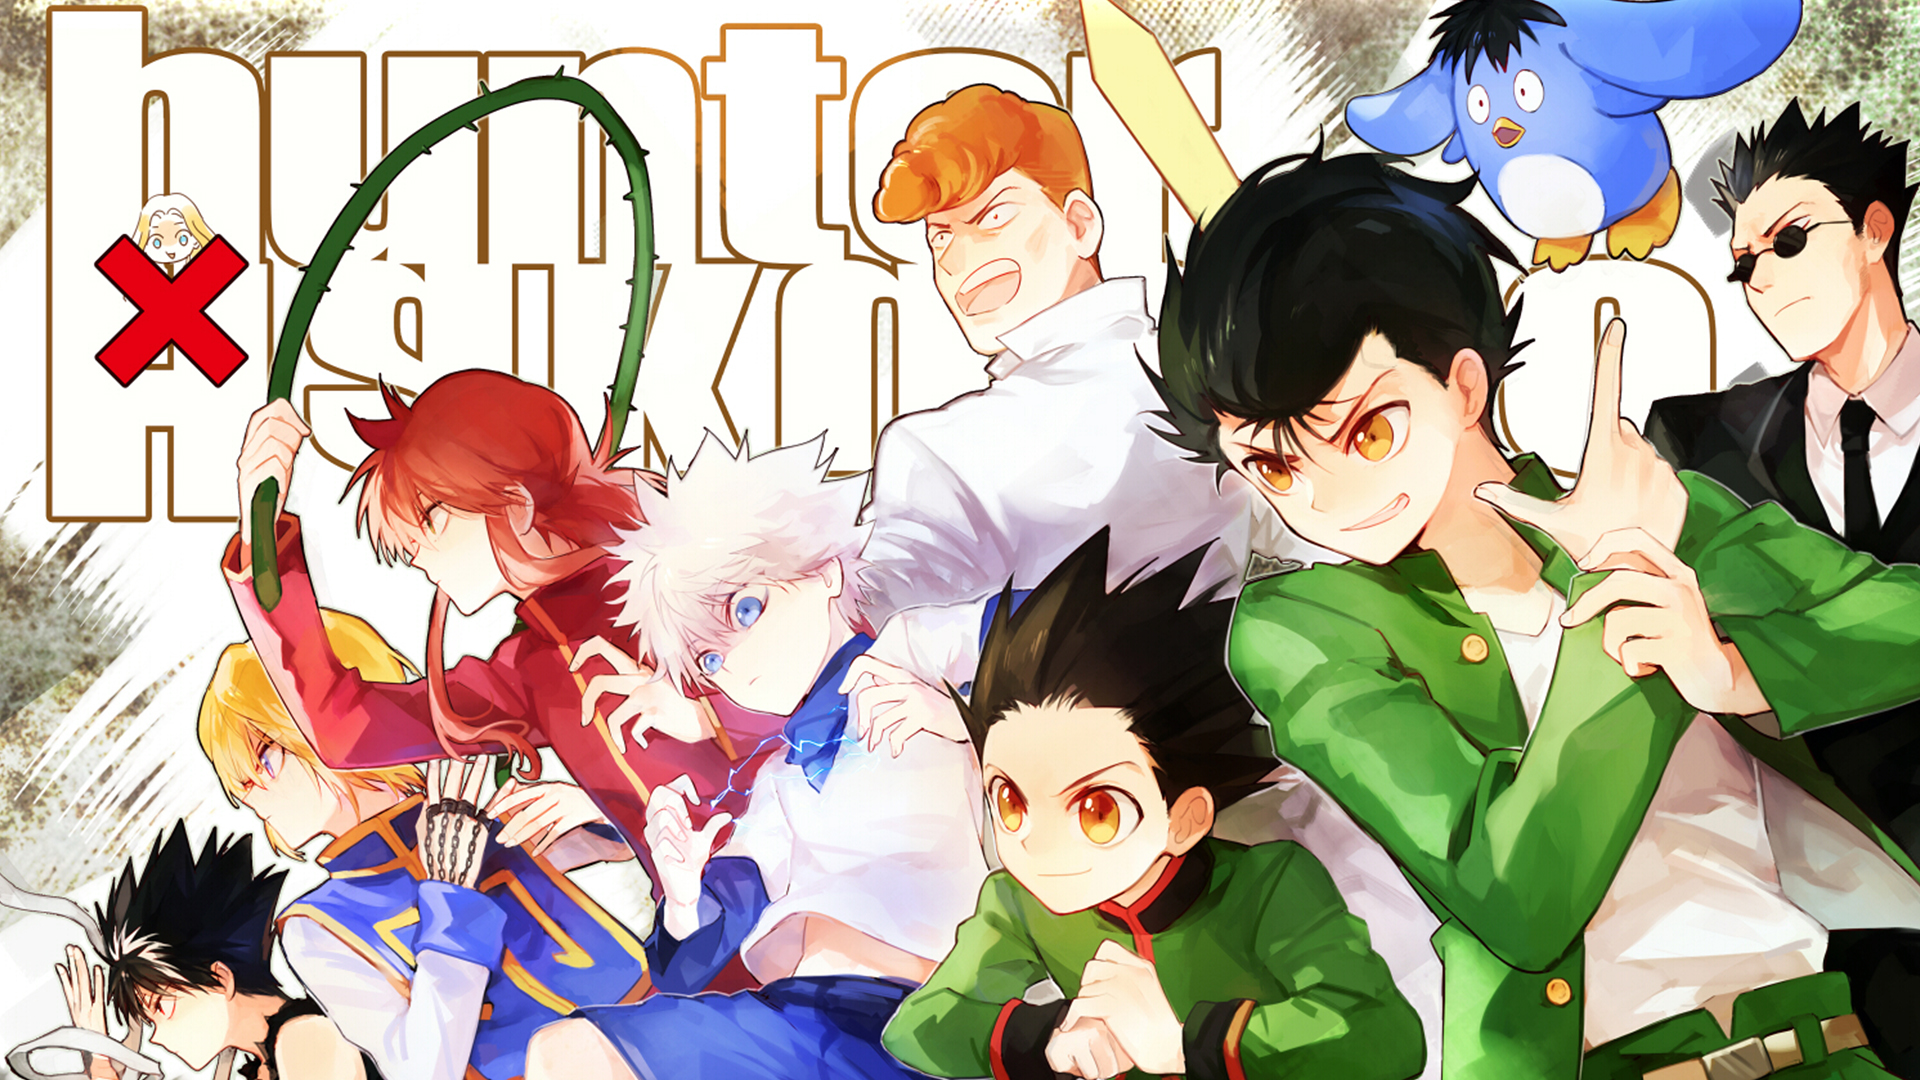 1920x1080 Anime, Yu Yu Hakusho, Hunter x Hunter, Crossover wallpaper JPG